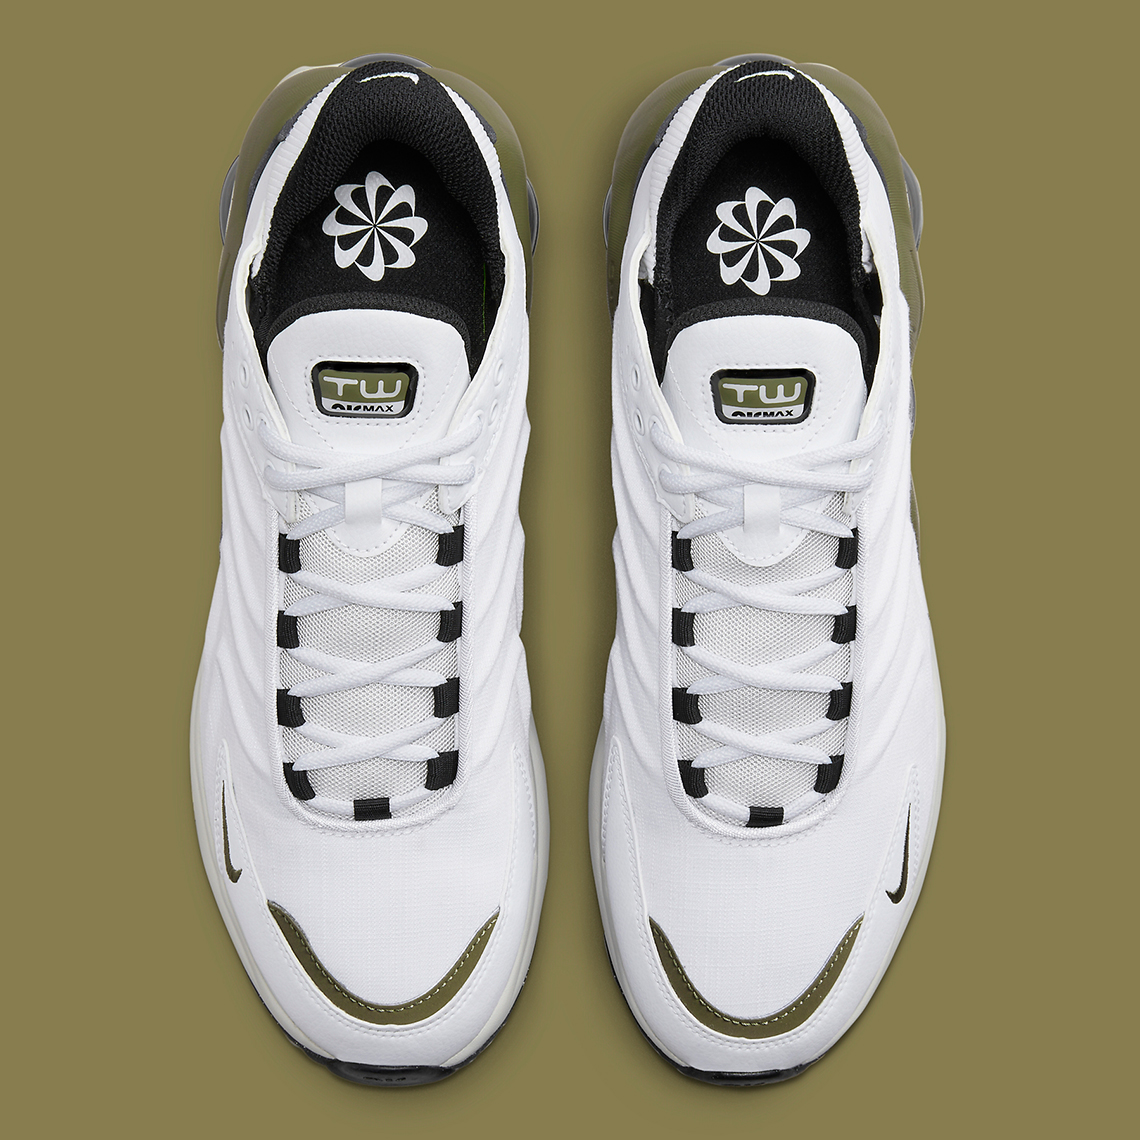 Nike Air Max Tw White Olive Black Fn3881 001 8